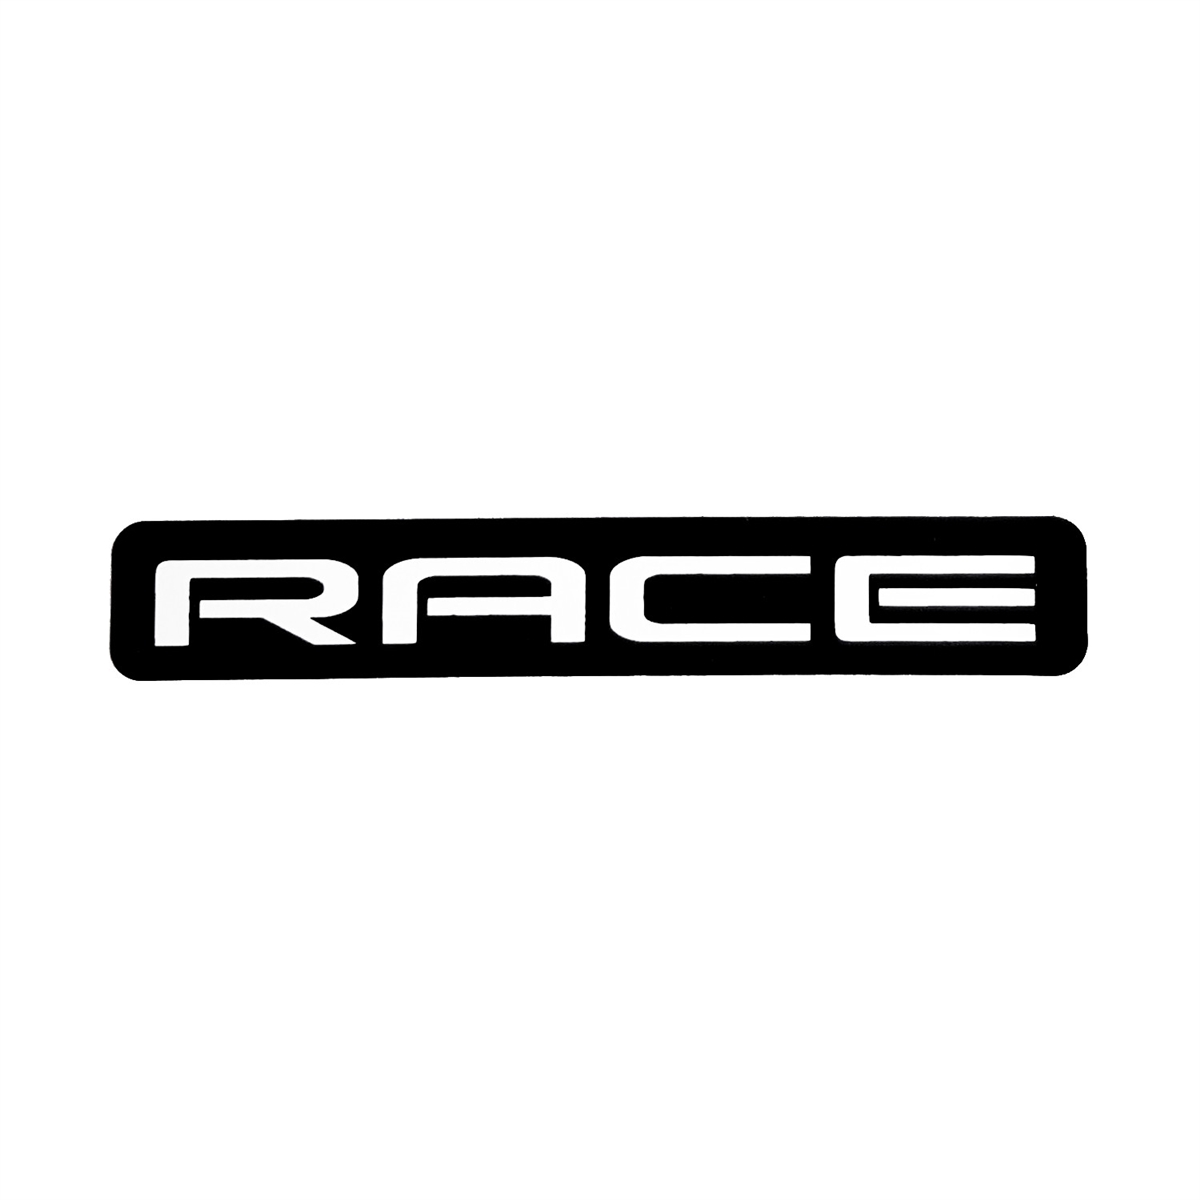 RACE Sticker Black/White